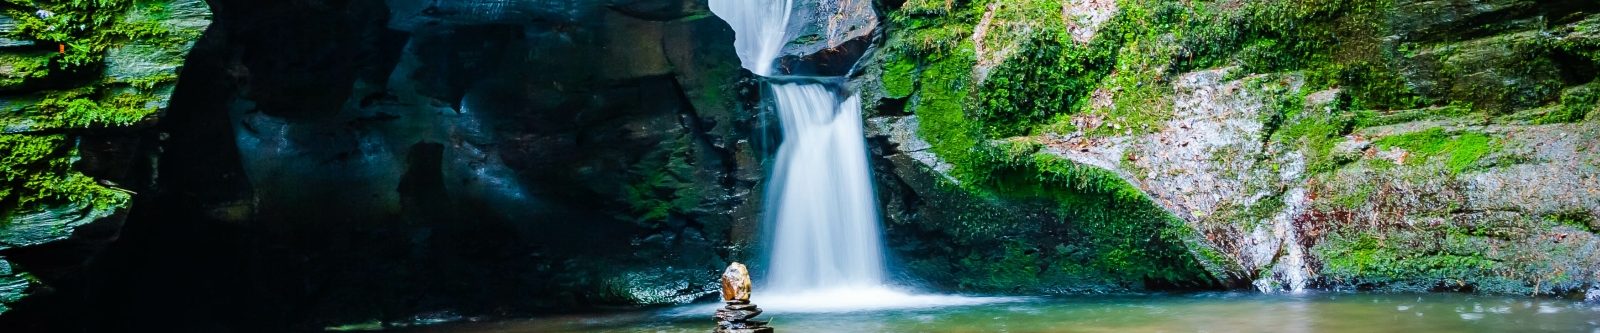 St Nectan's Glen Waterfall